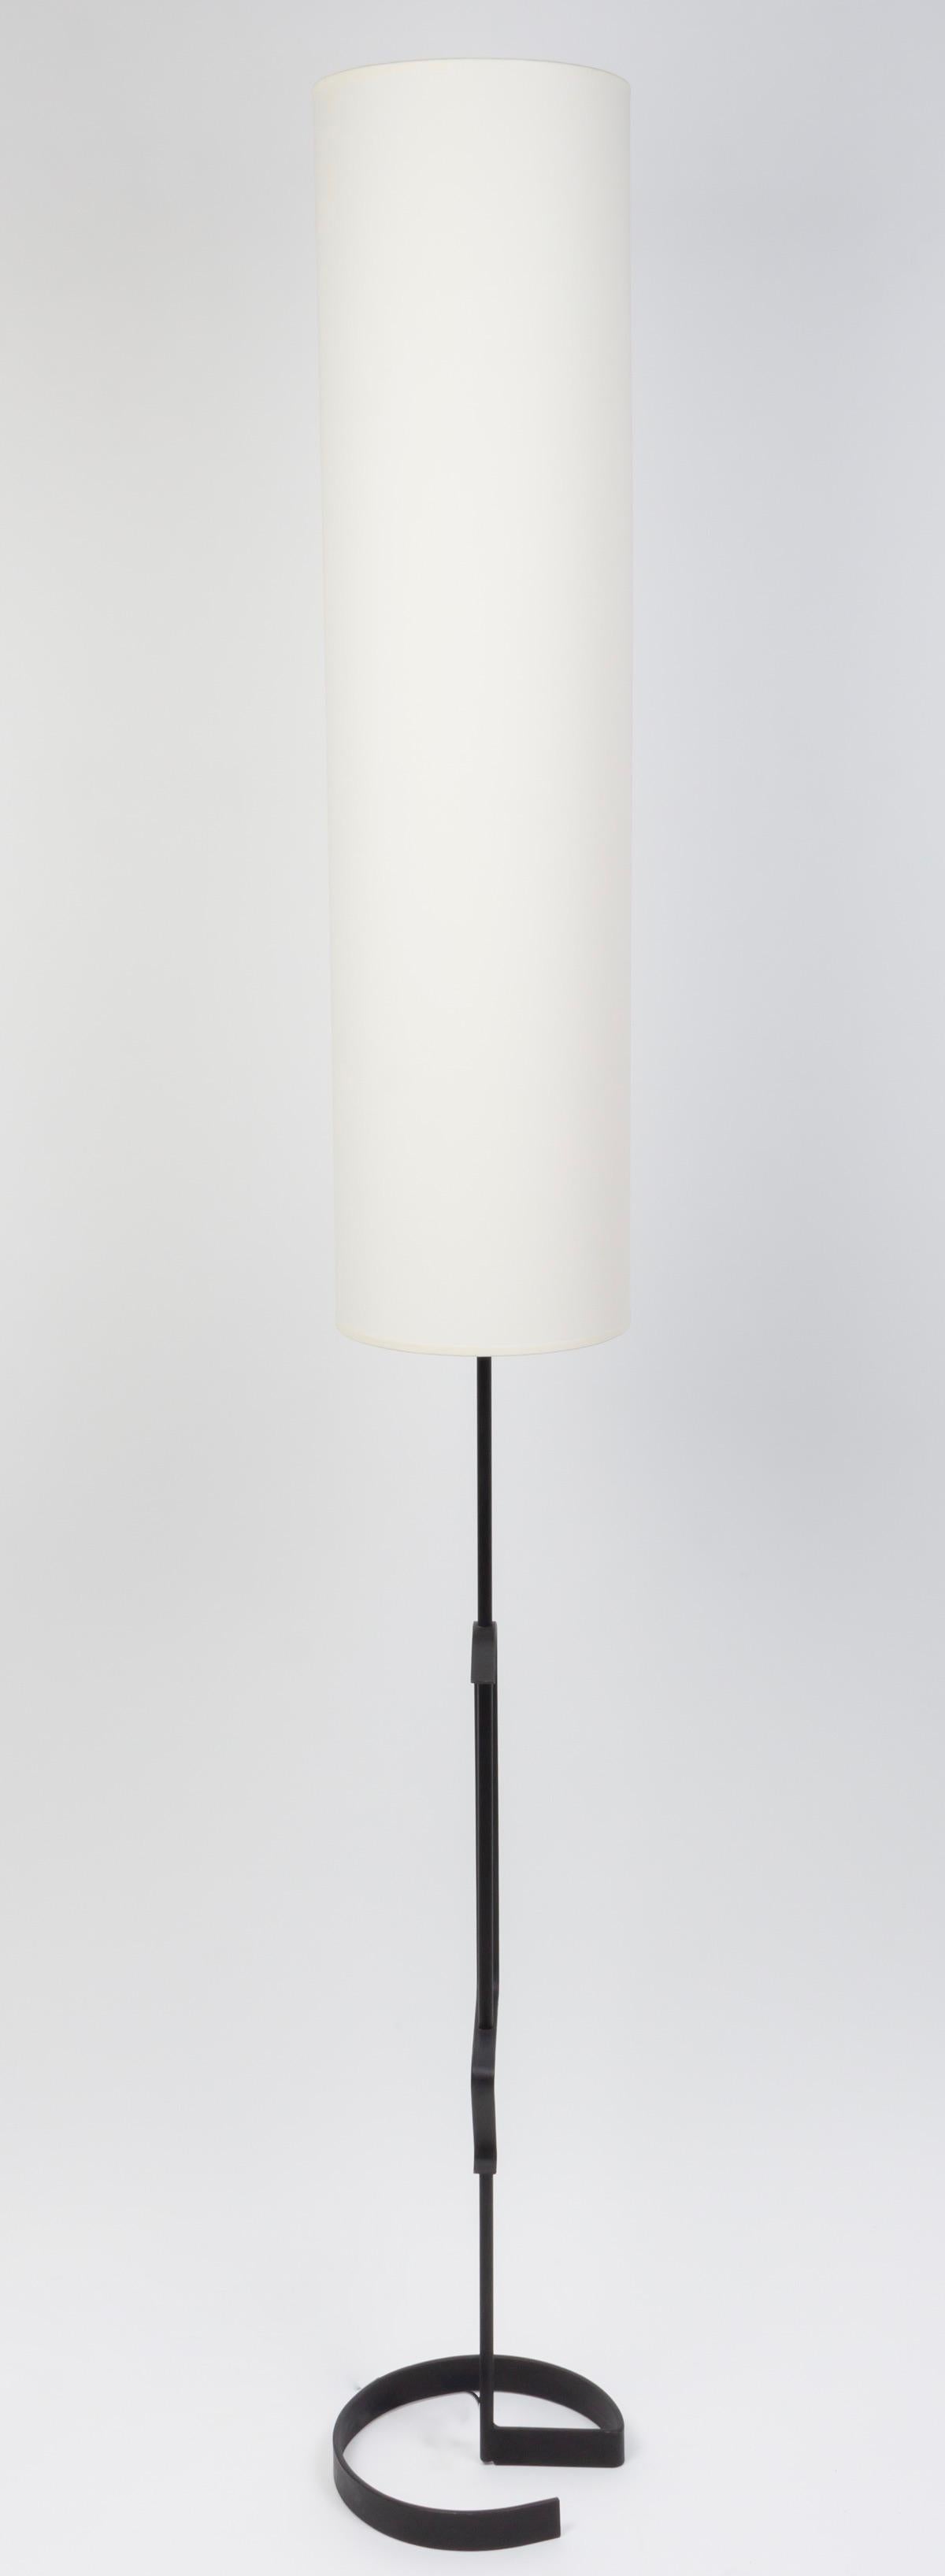 1960s Wrought Iron Floor Lamp Ateliers Vallauris 1